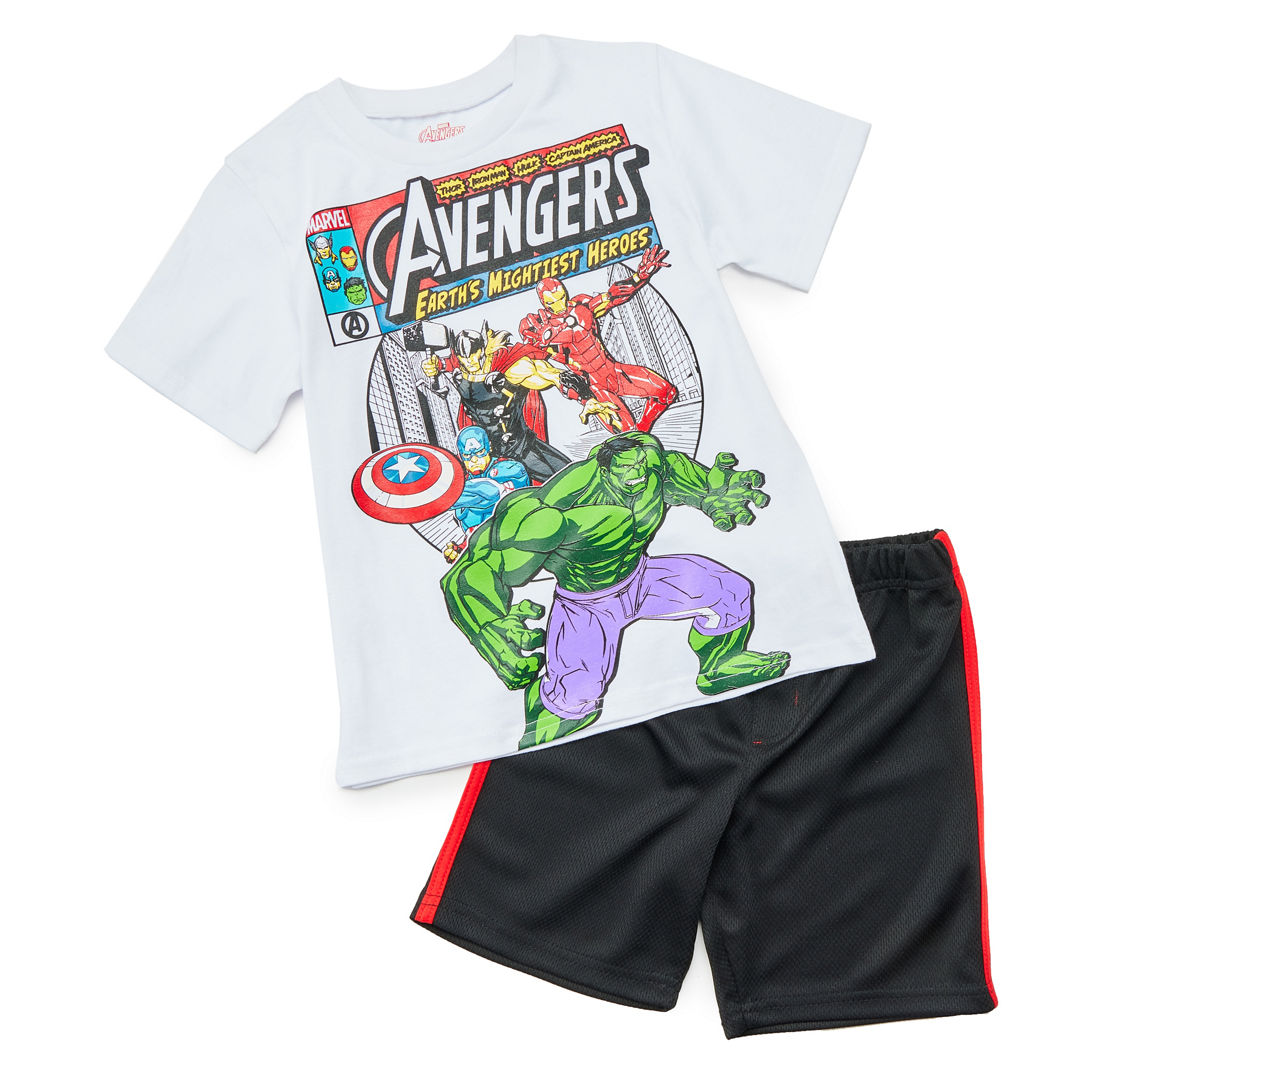 Toddler Size 4T "Avengers" White Comic Tee & Black Side-Stripe Shorts